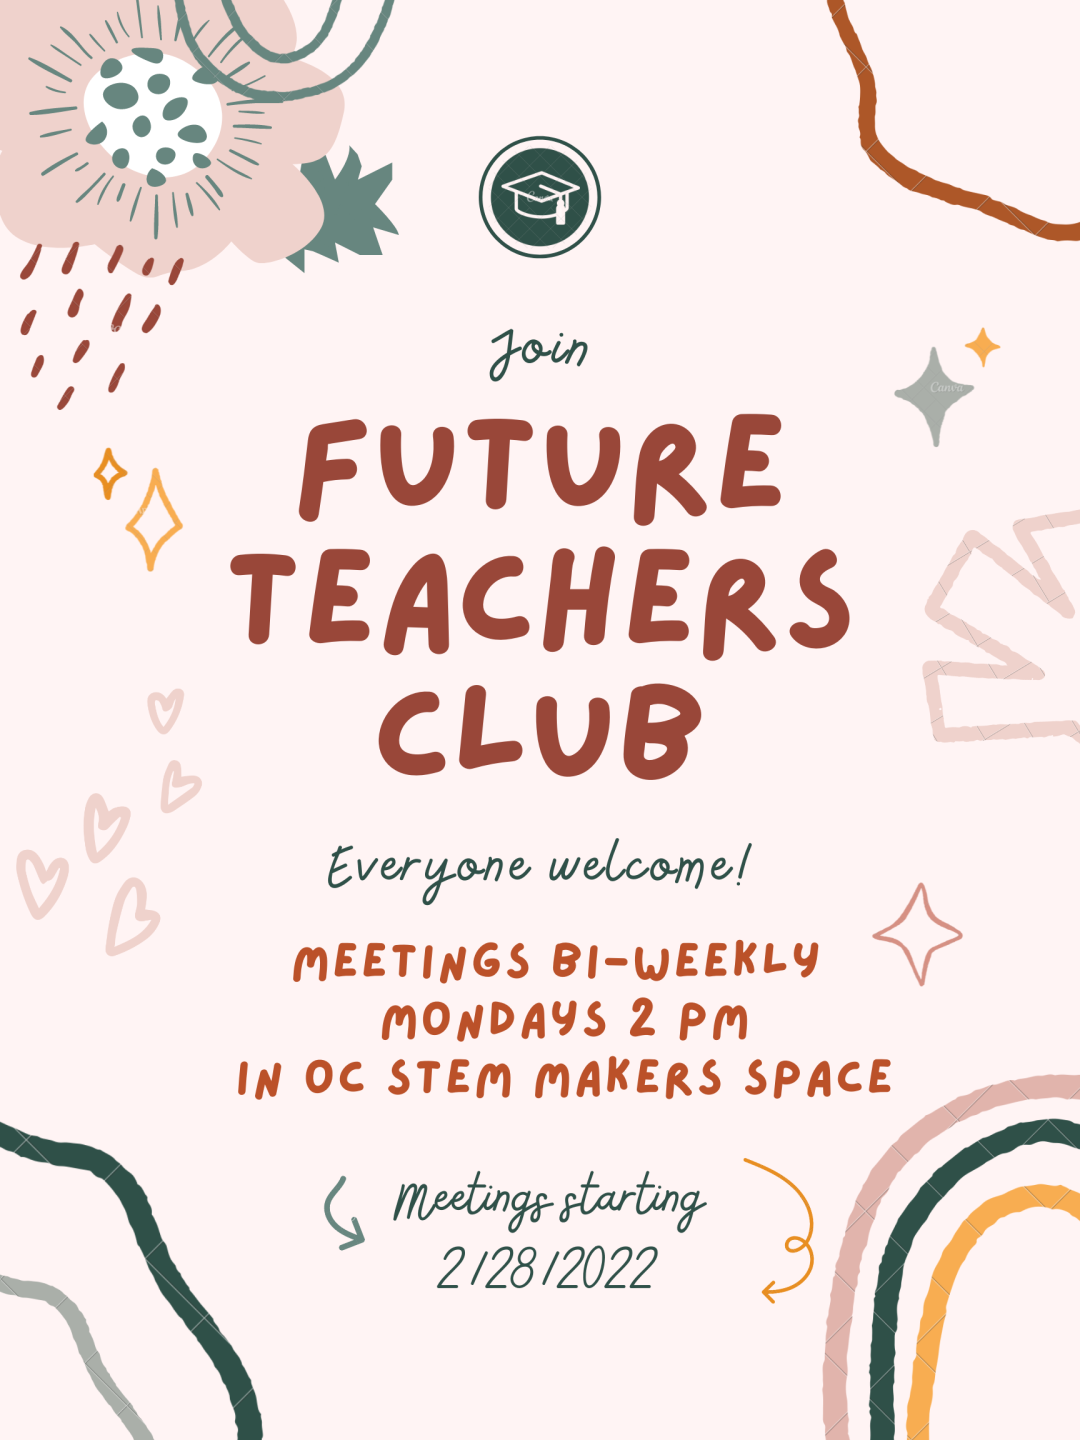 Future Teachers Club Meetings